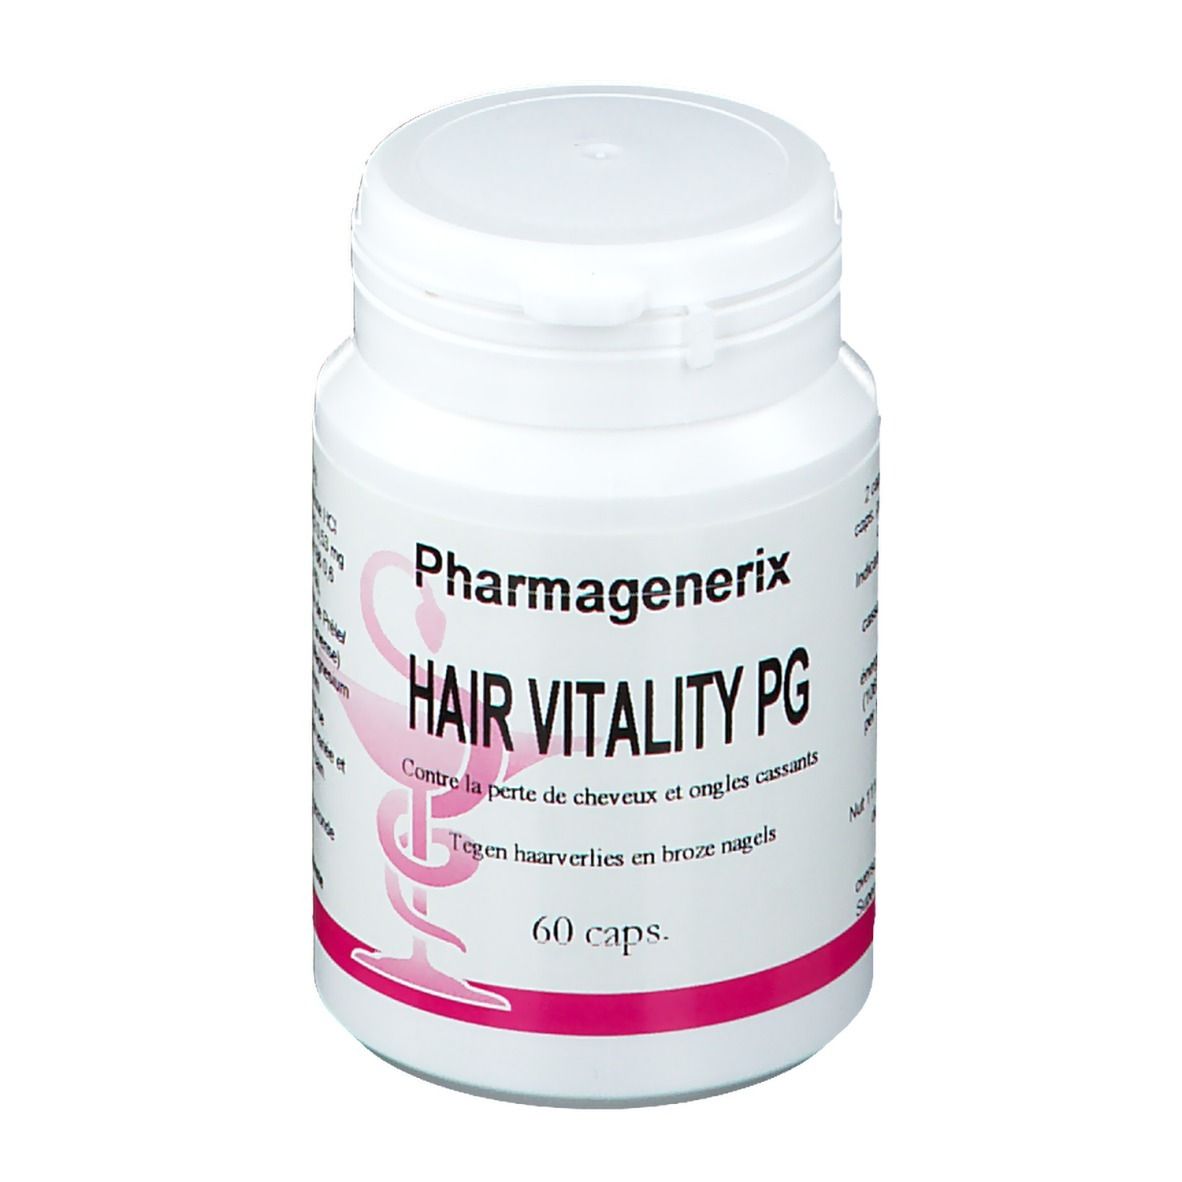 Pharmagenerix Hair Vitality PG